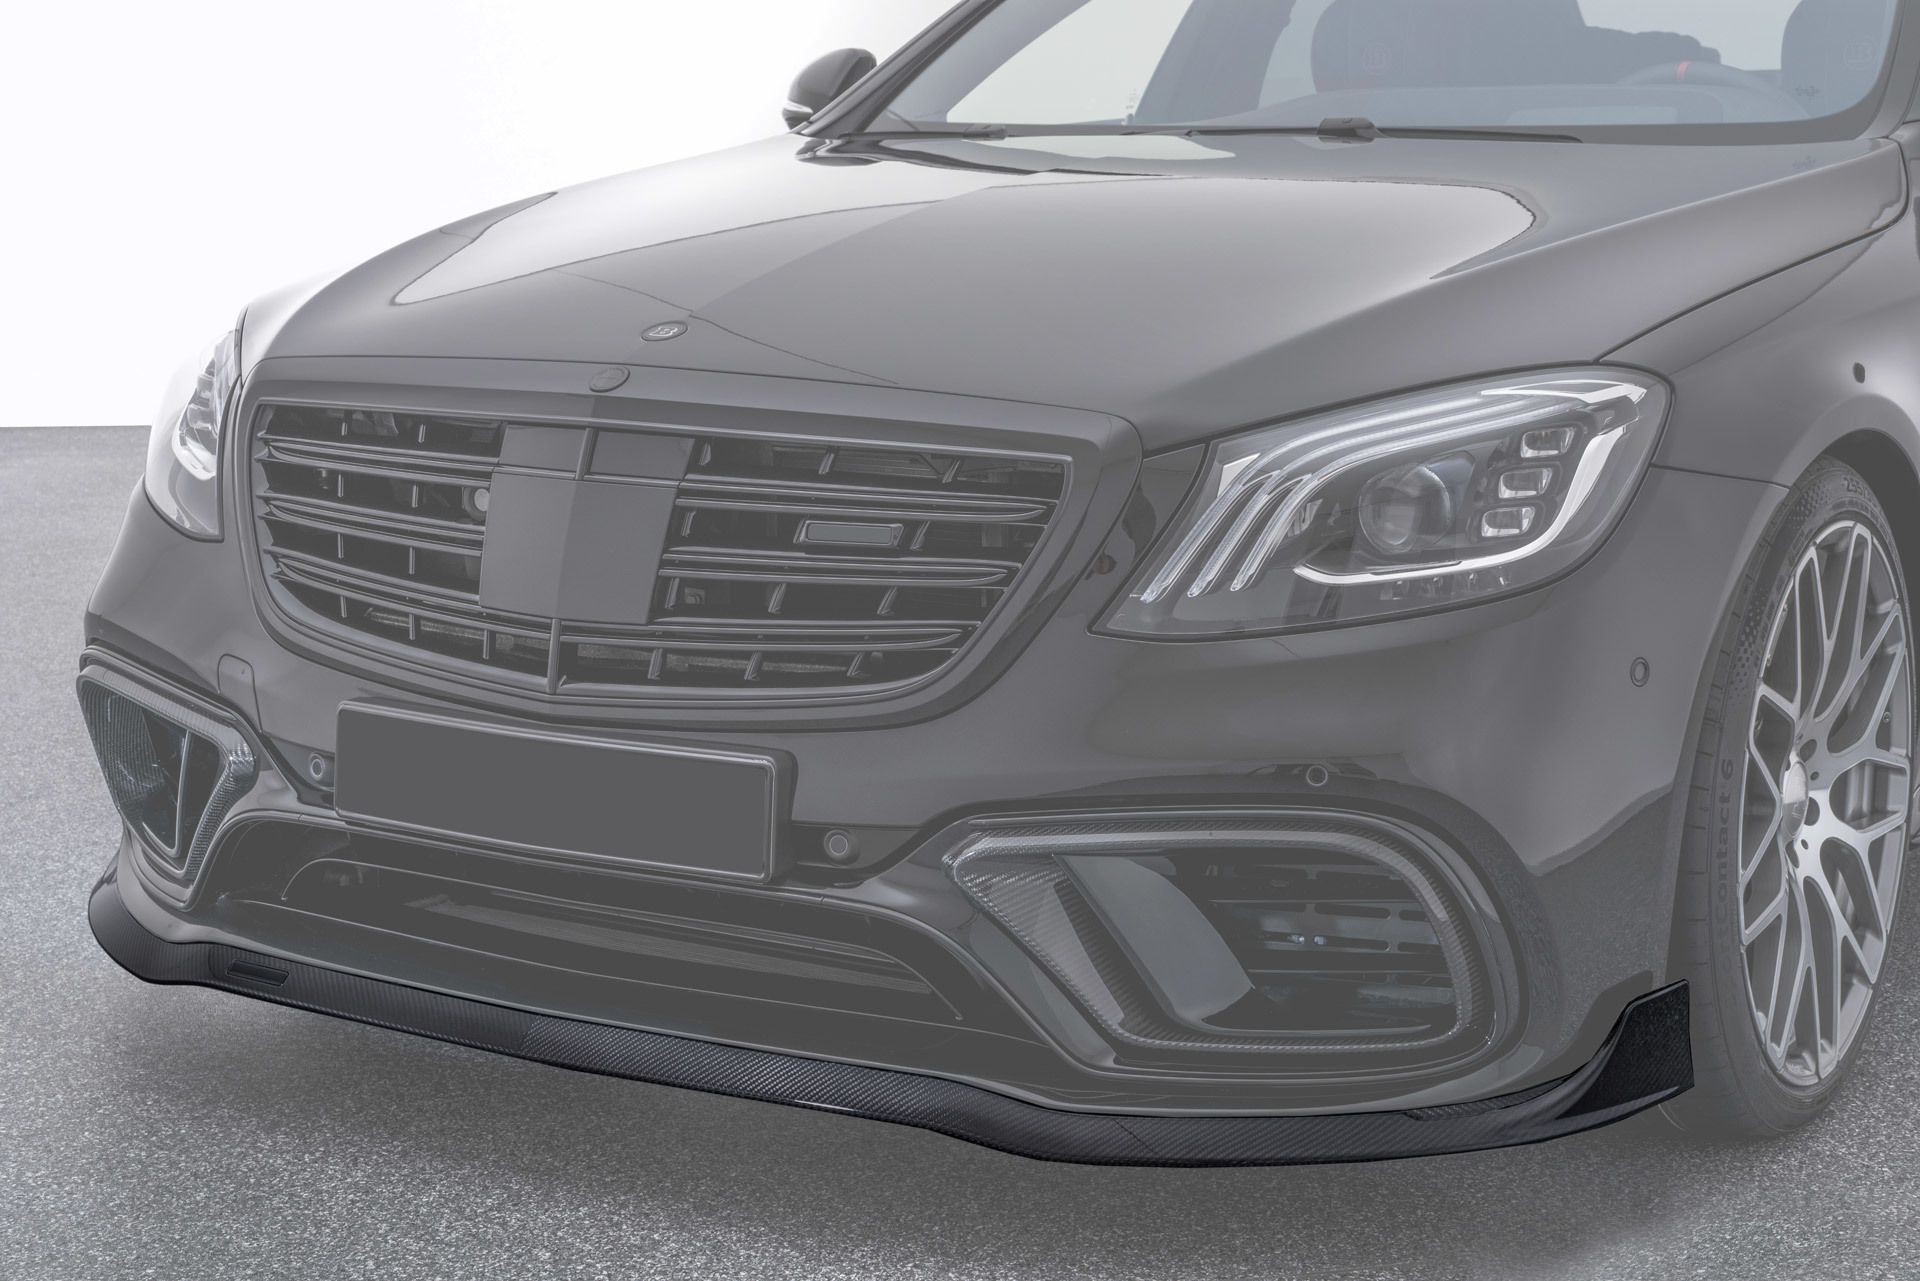  Carbon fiber front bumper spoiler 63 AMG for Mercedes S-class W222